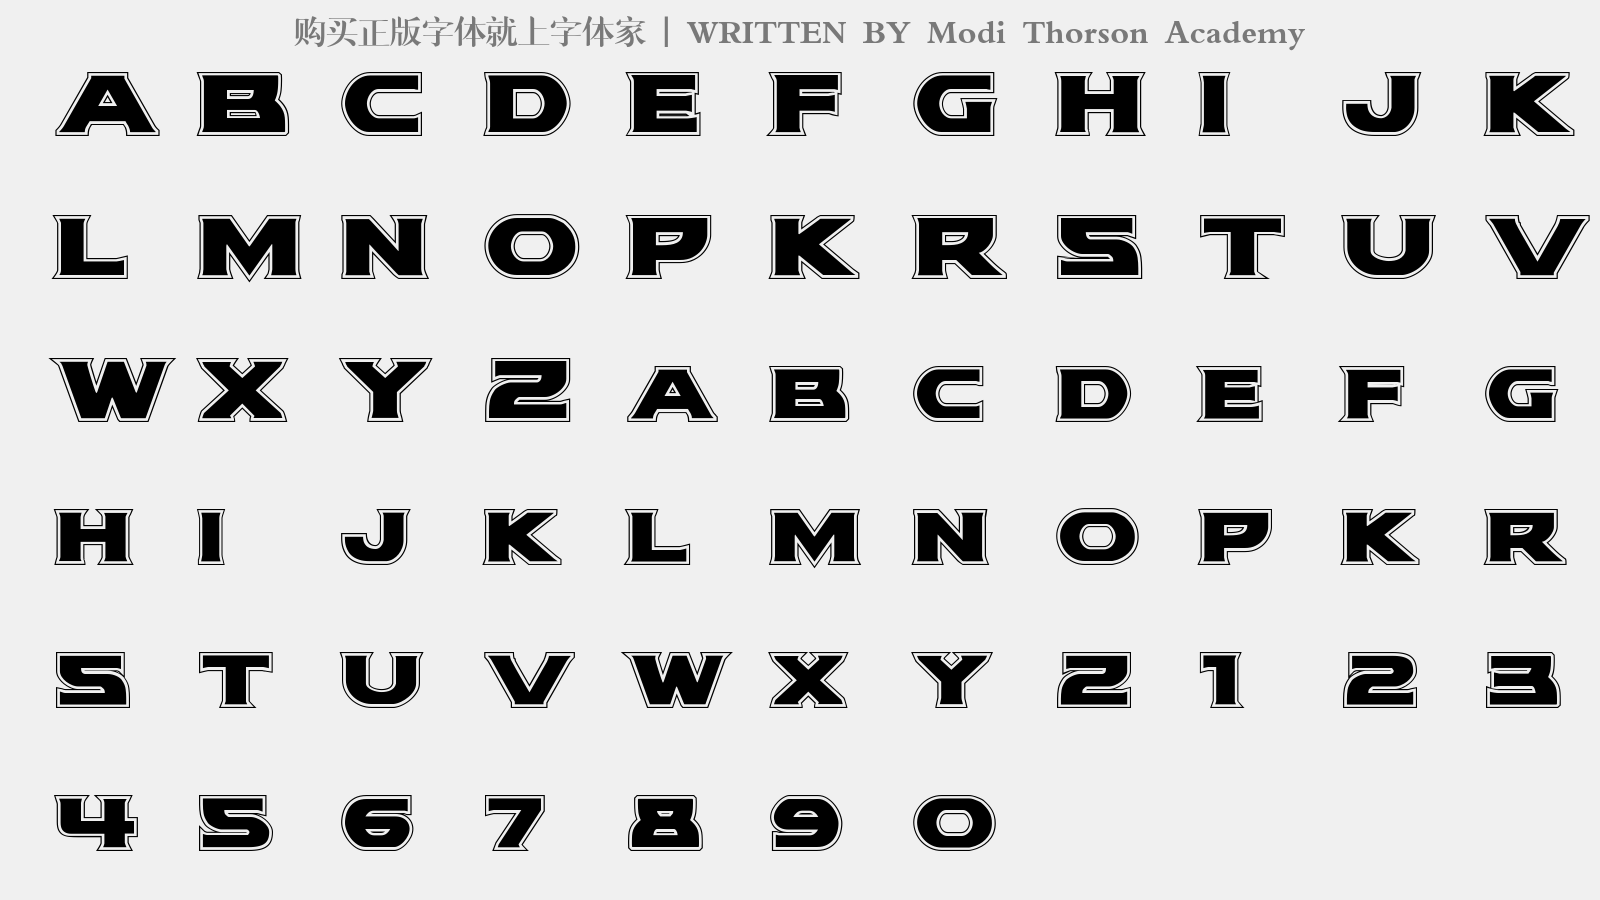 Modi Thorson Academy - 大写字母/小写字母/数字